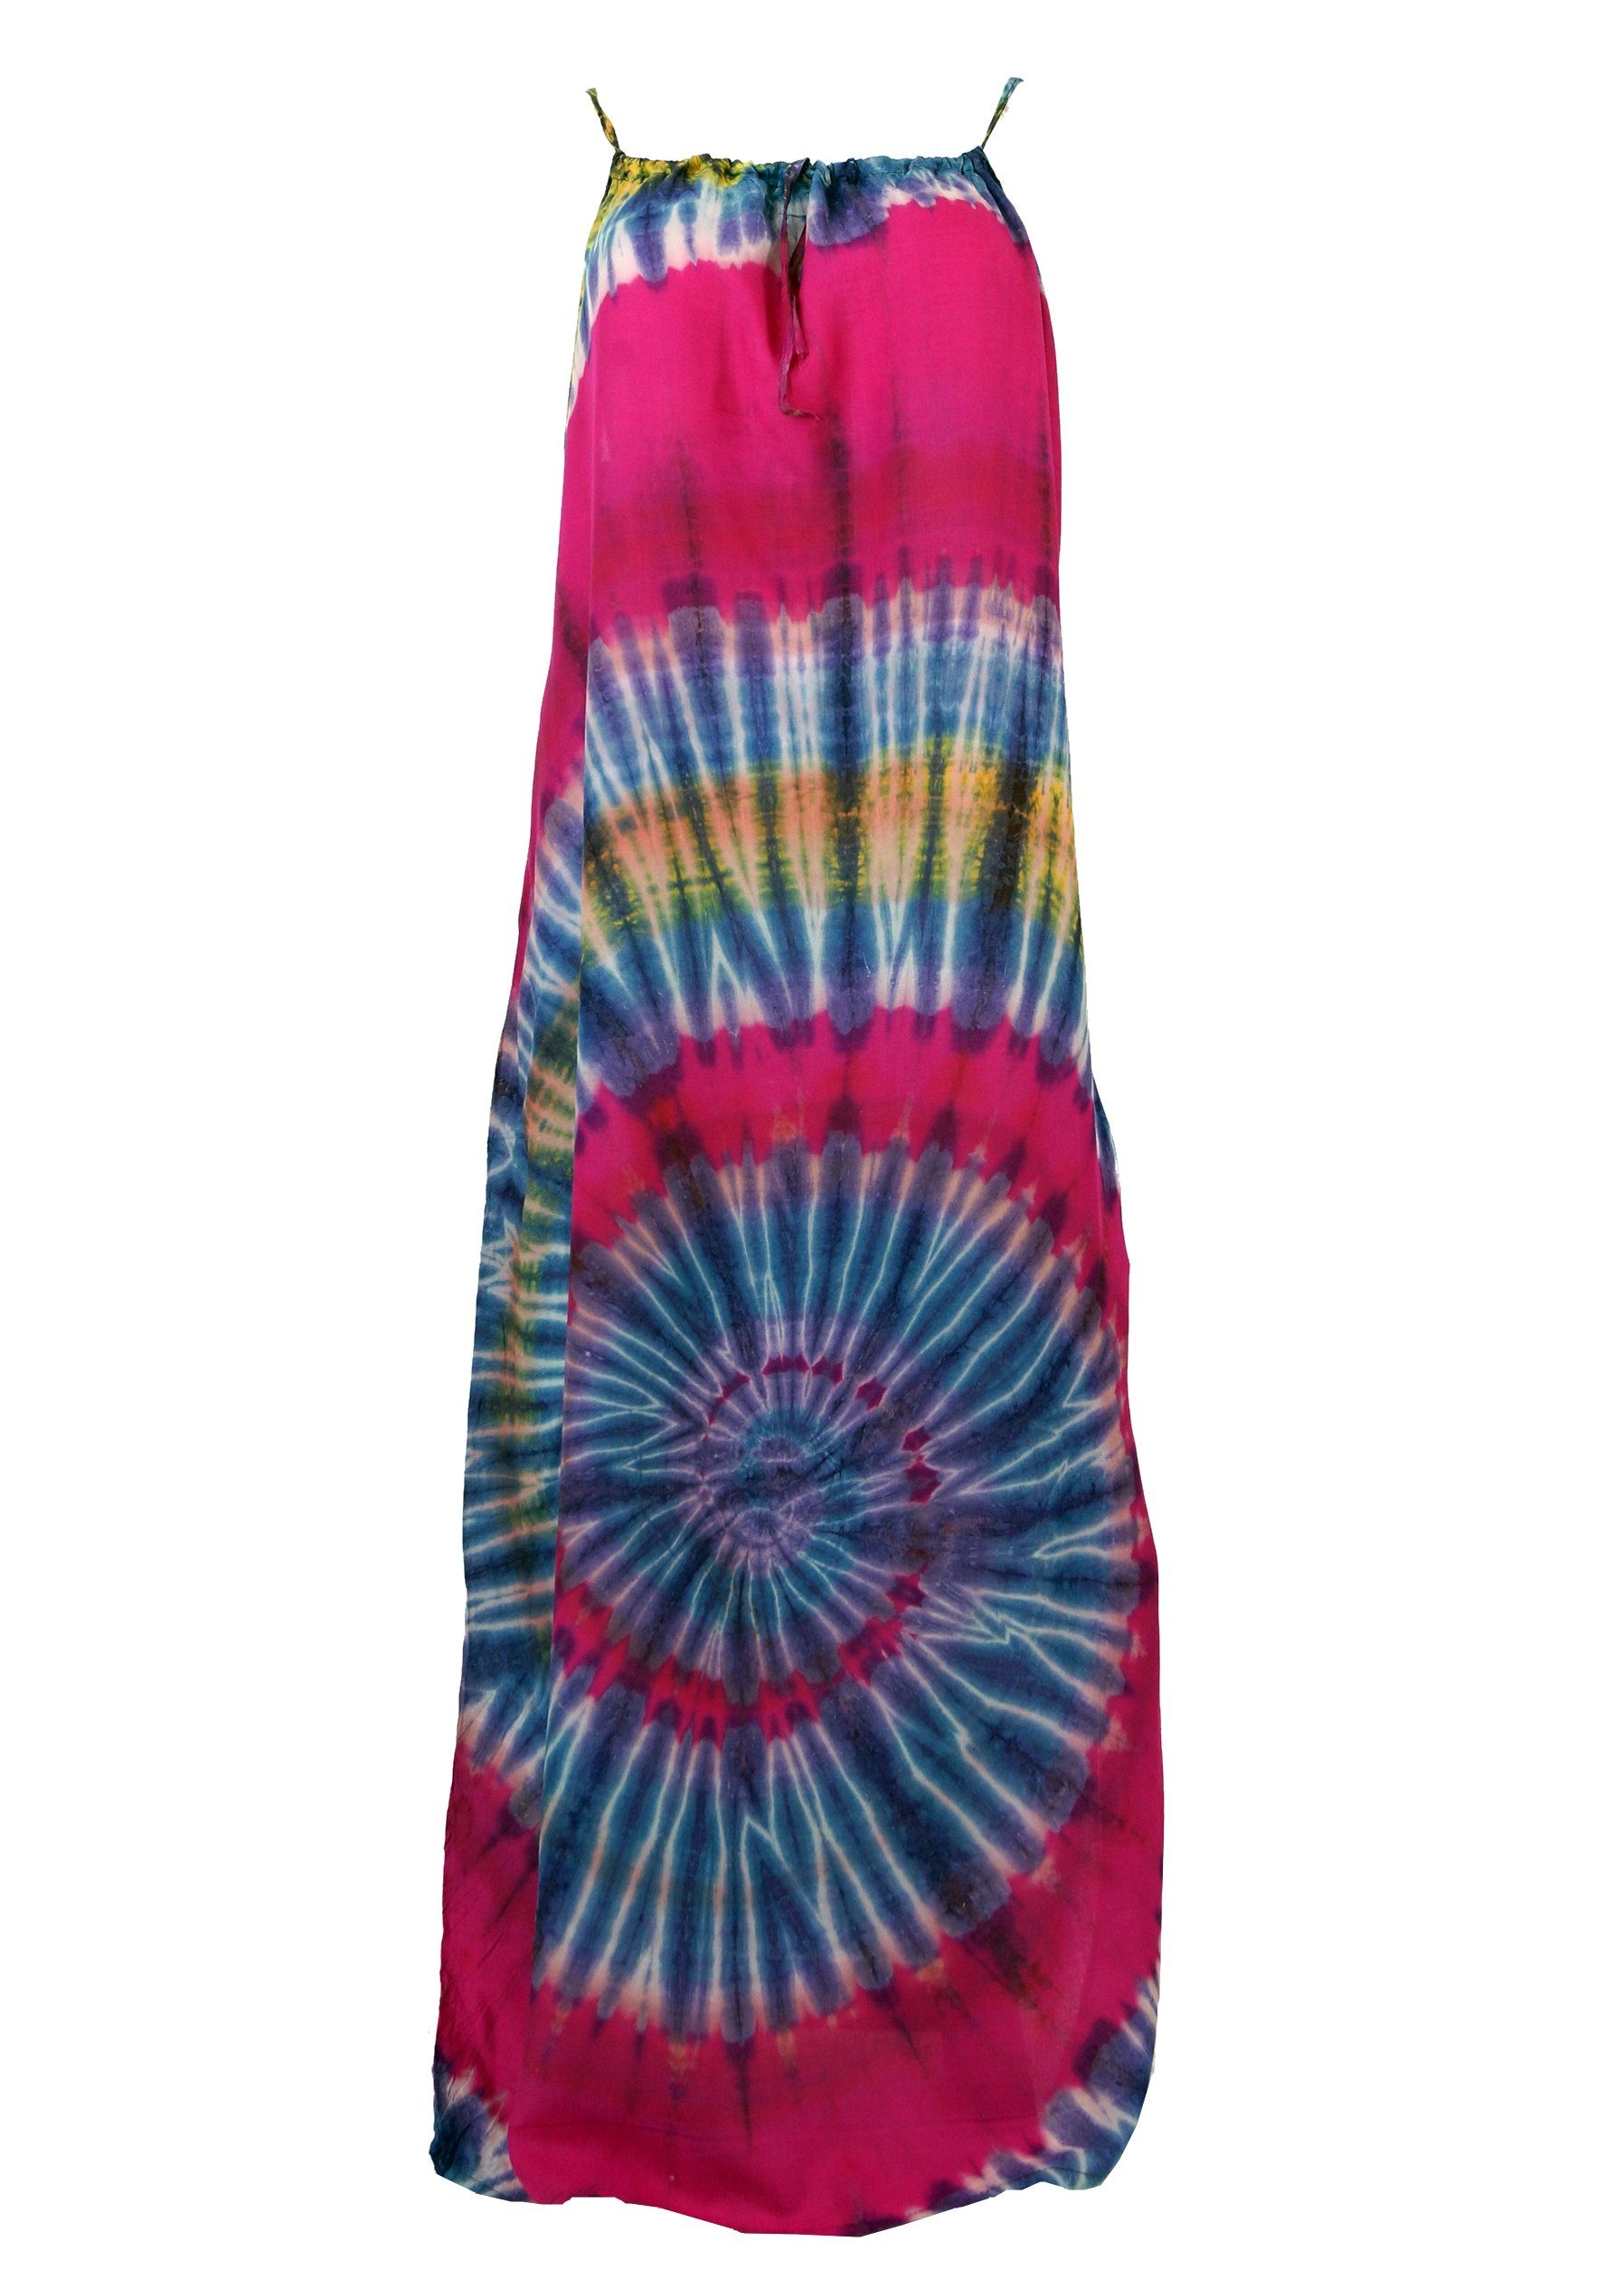 Guru-Shop Midikleid Batik Hippiekleid, Bekleidung Sommerkleid, Trägerkleid,.. alternative pink